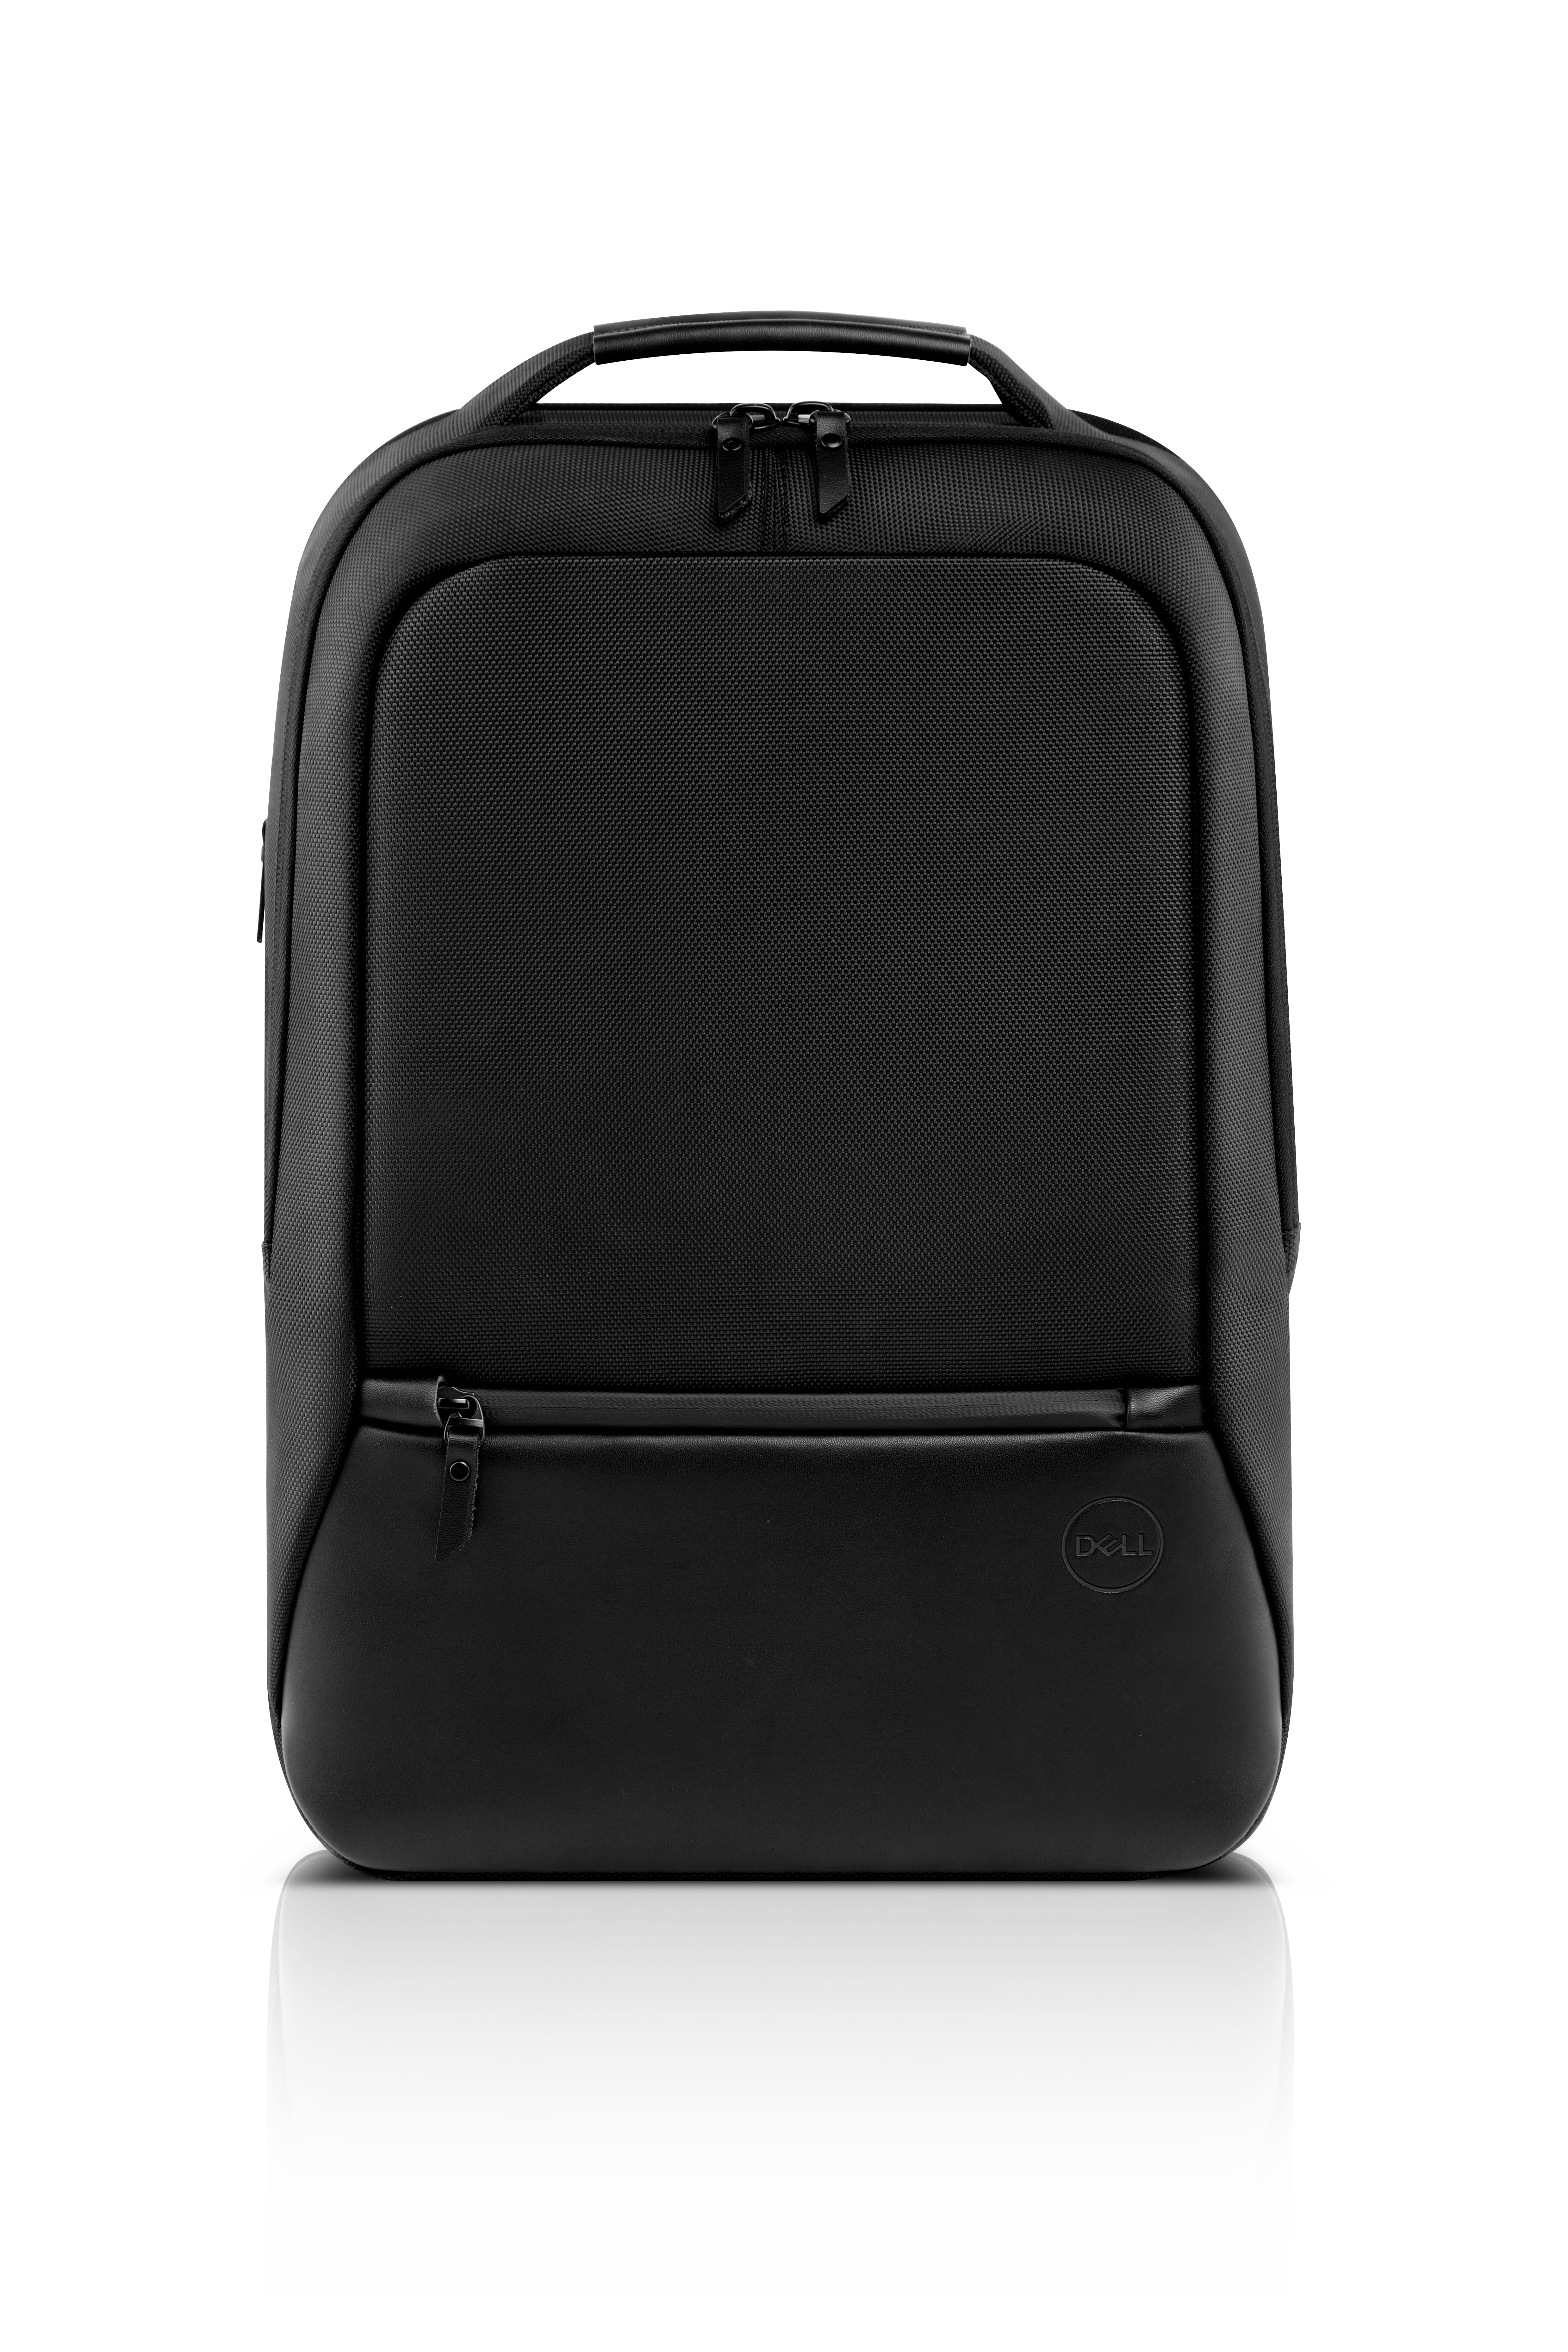 Premier Slim Backpack 15 - Notebook-Rucksack - 38.1 cm (15")